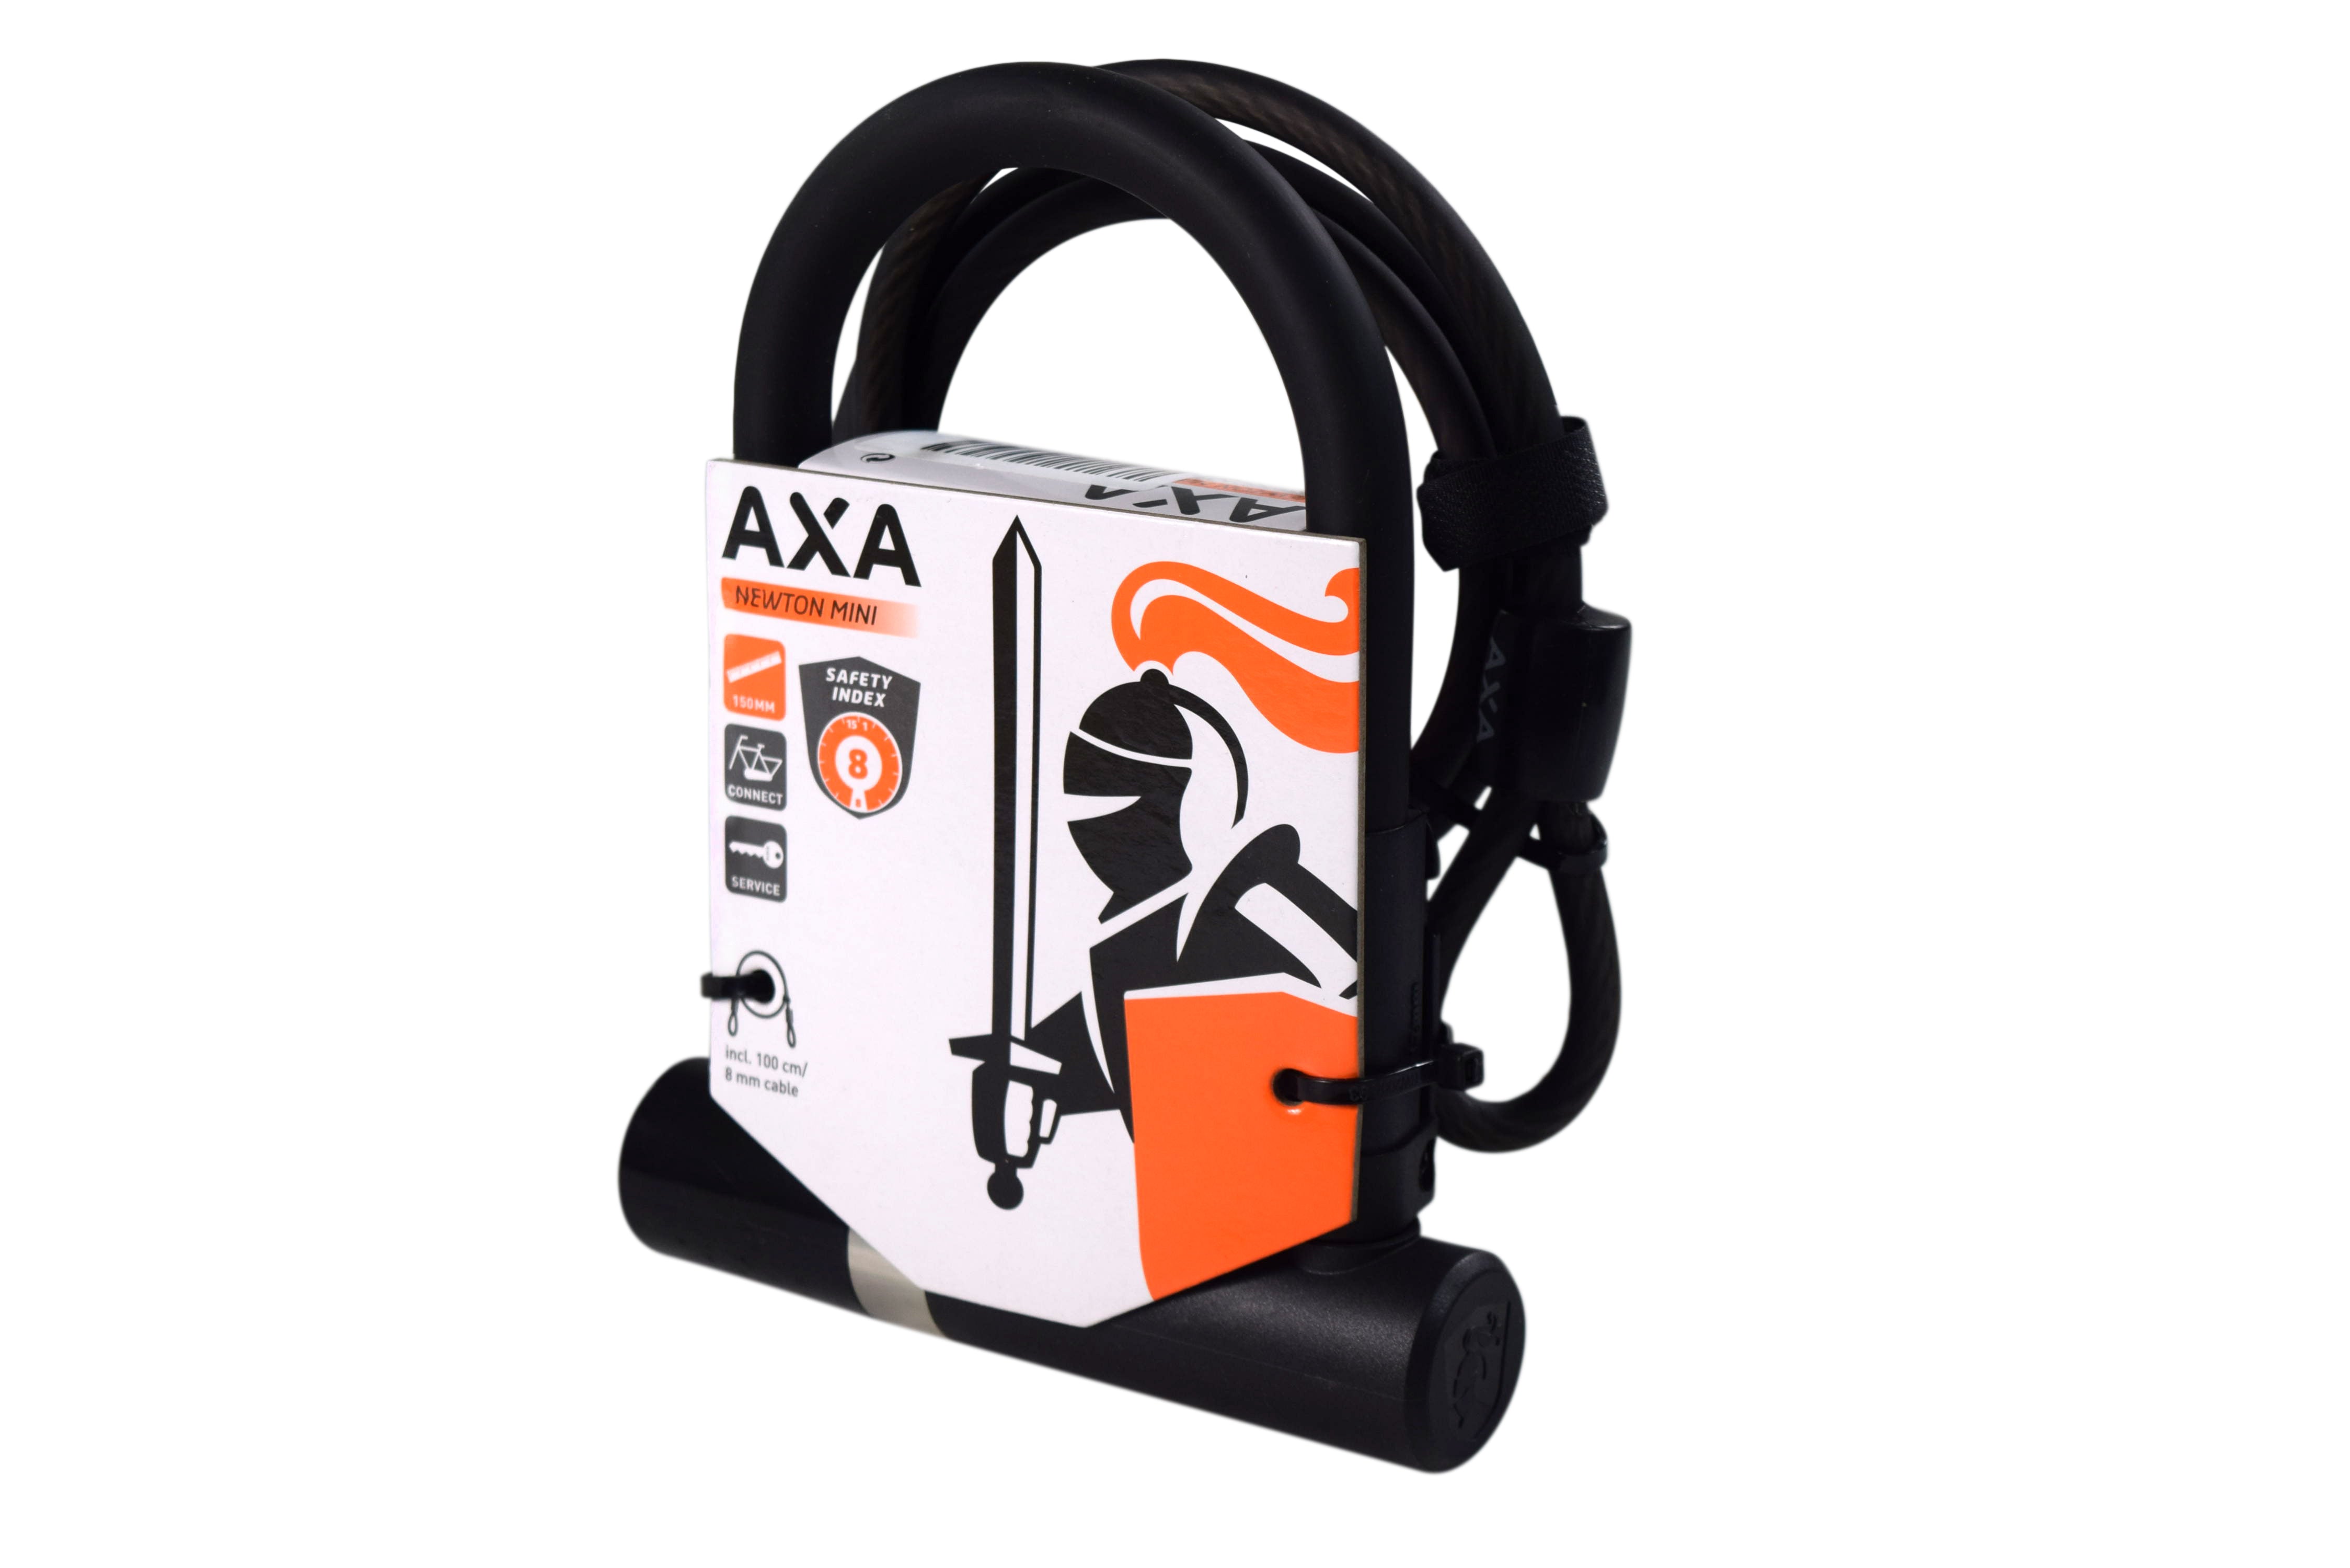 AXA-005155-Newton-Mini-Cable-100-8-w-Mounting-Bracket-U-Lock-image-2